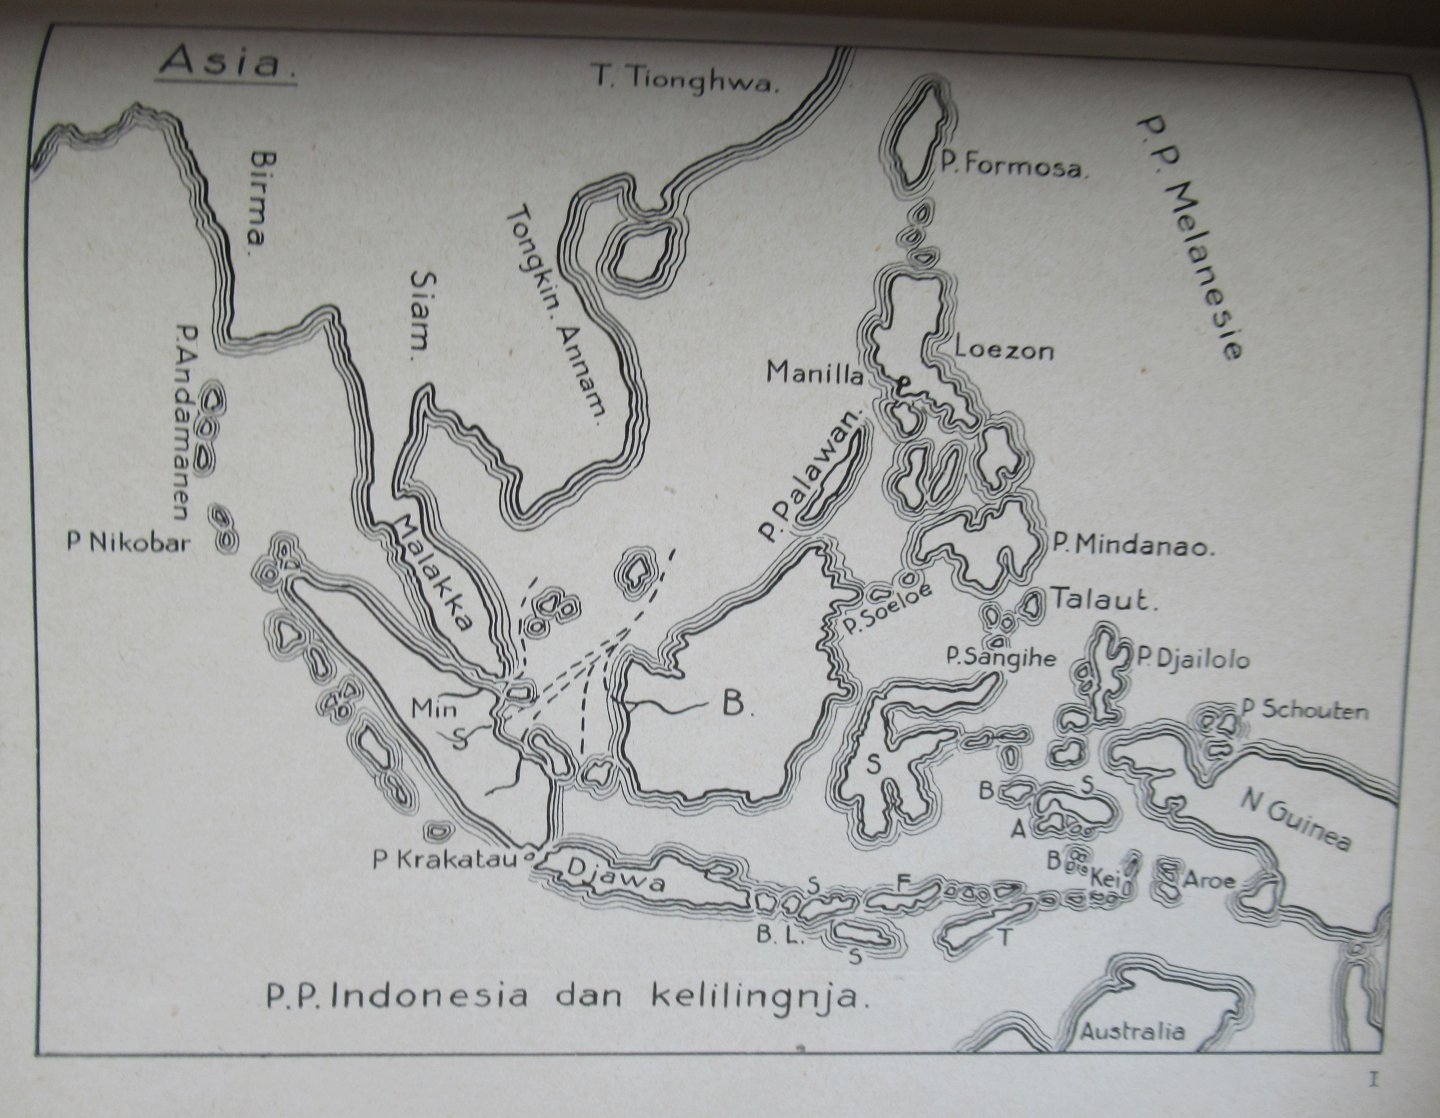 Hartog, P. den - Asia selatan dan Asia Timoer (Rentjana ilmoe boemi dan bangsa bangsa)